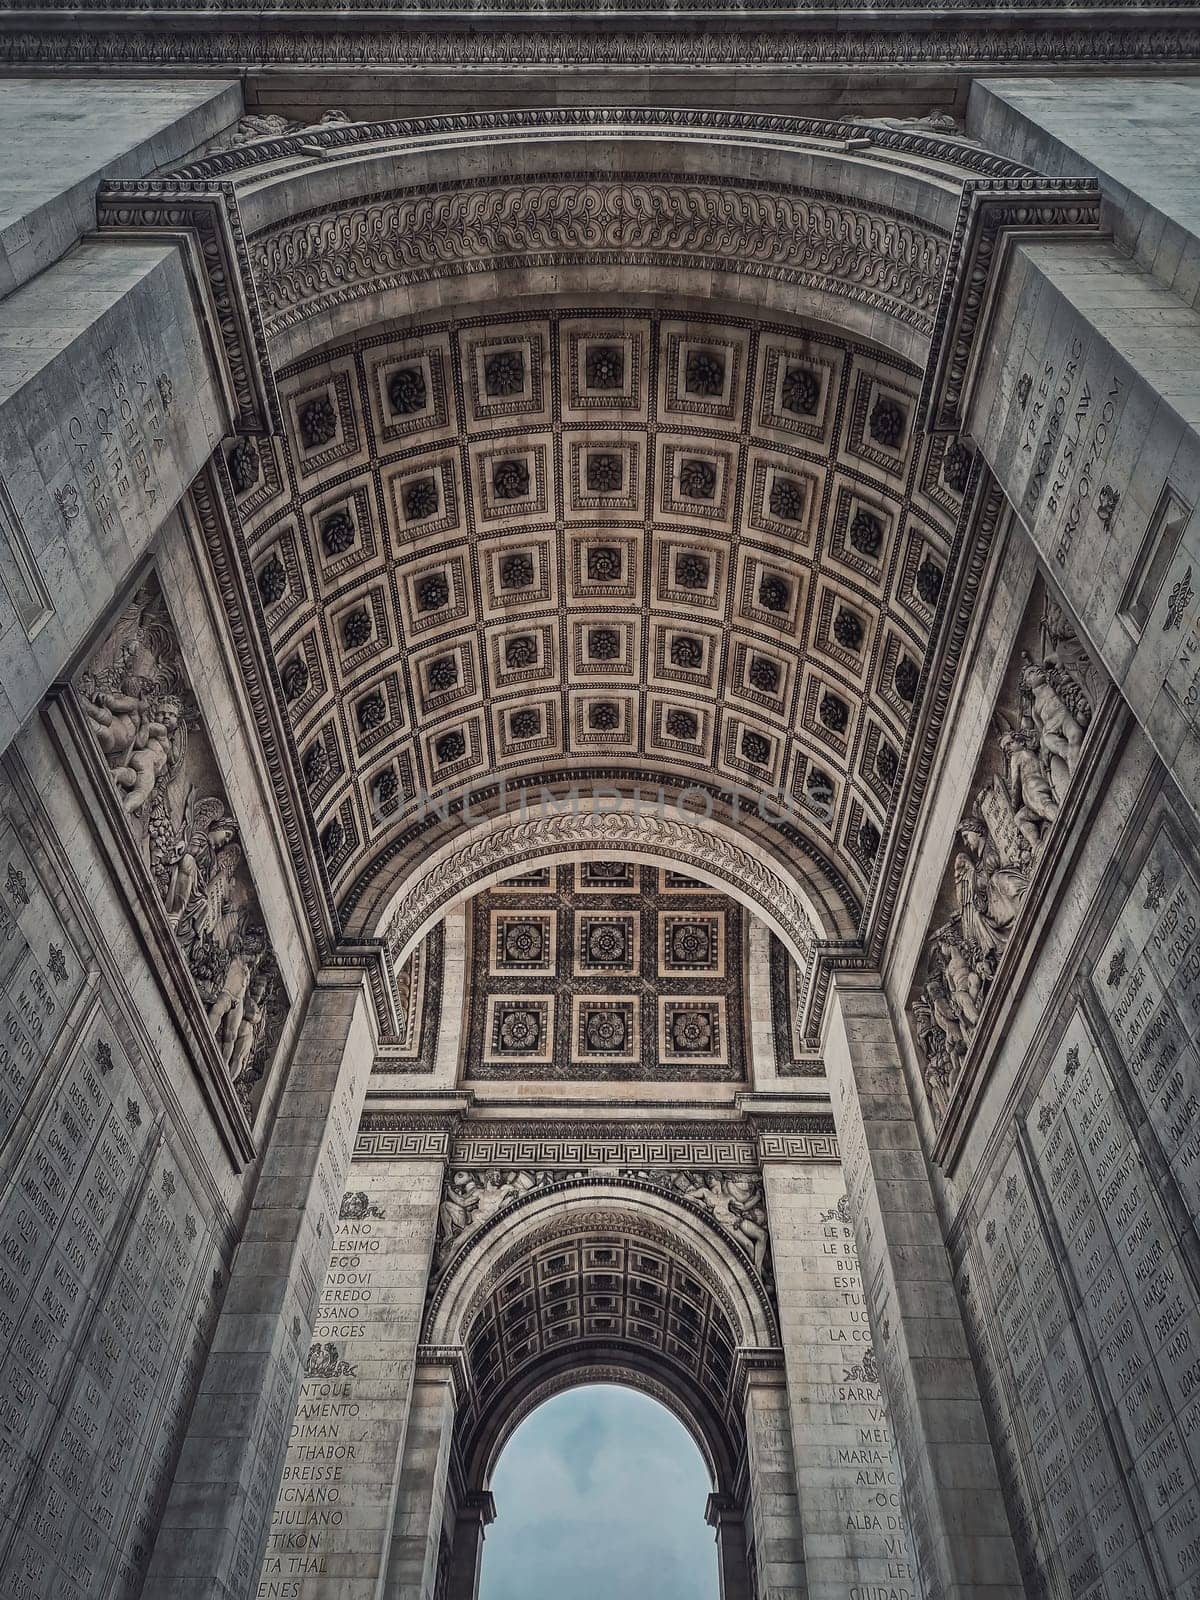 View underneath triumphal Arch (Arc de triomphe) in Paris, France. Architectural details of the famous historic landmark	 by psychoshadow